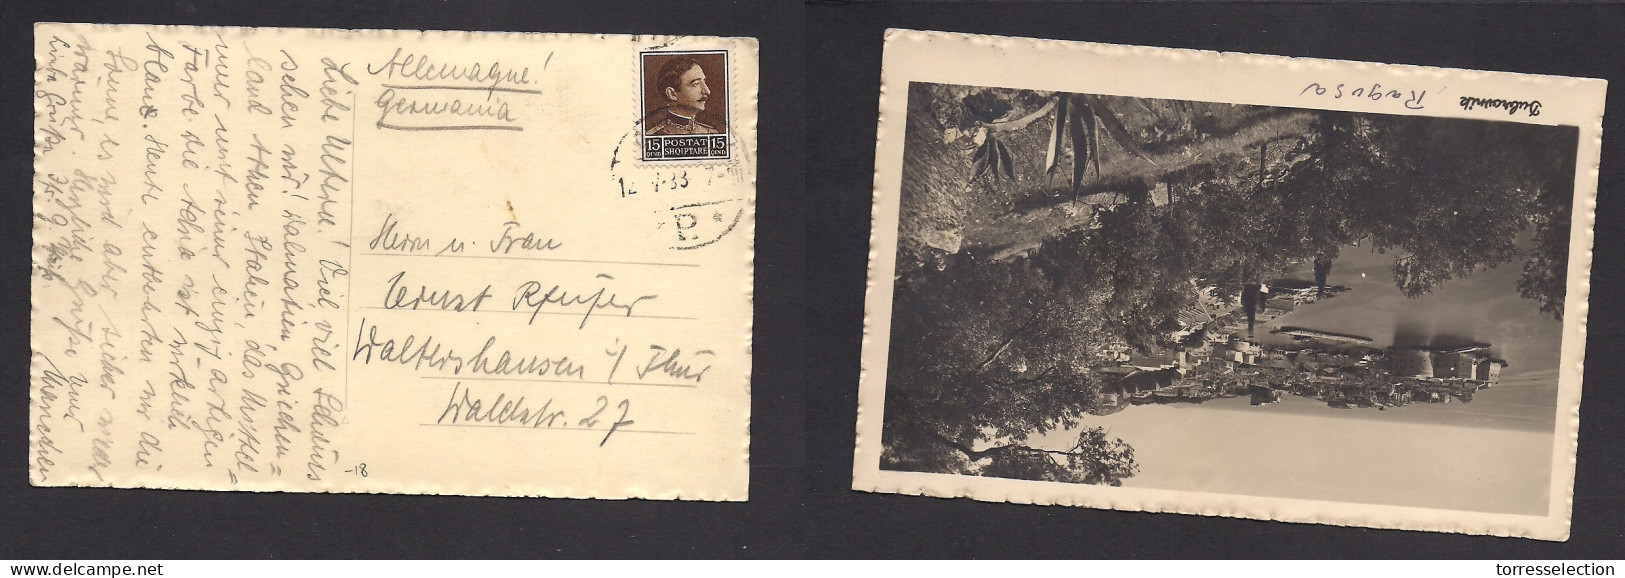 ALBANIA. 1938. Ragusa Ppc, Tirane - Germany, Waltershansen. Fkd Ppc. XSALE. - Albanien